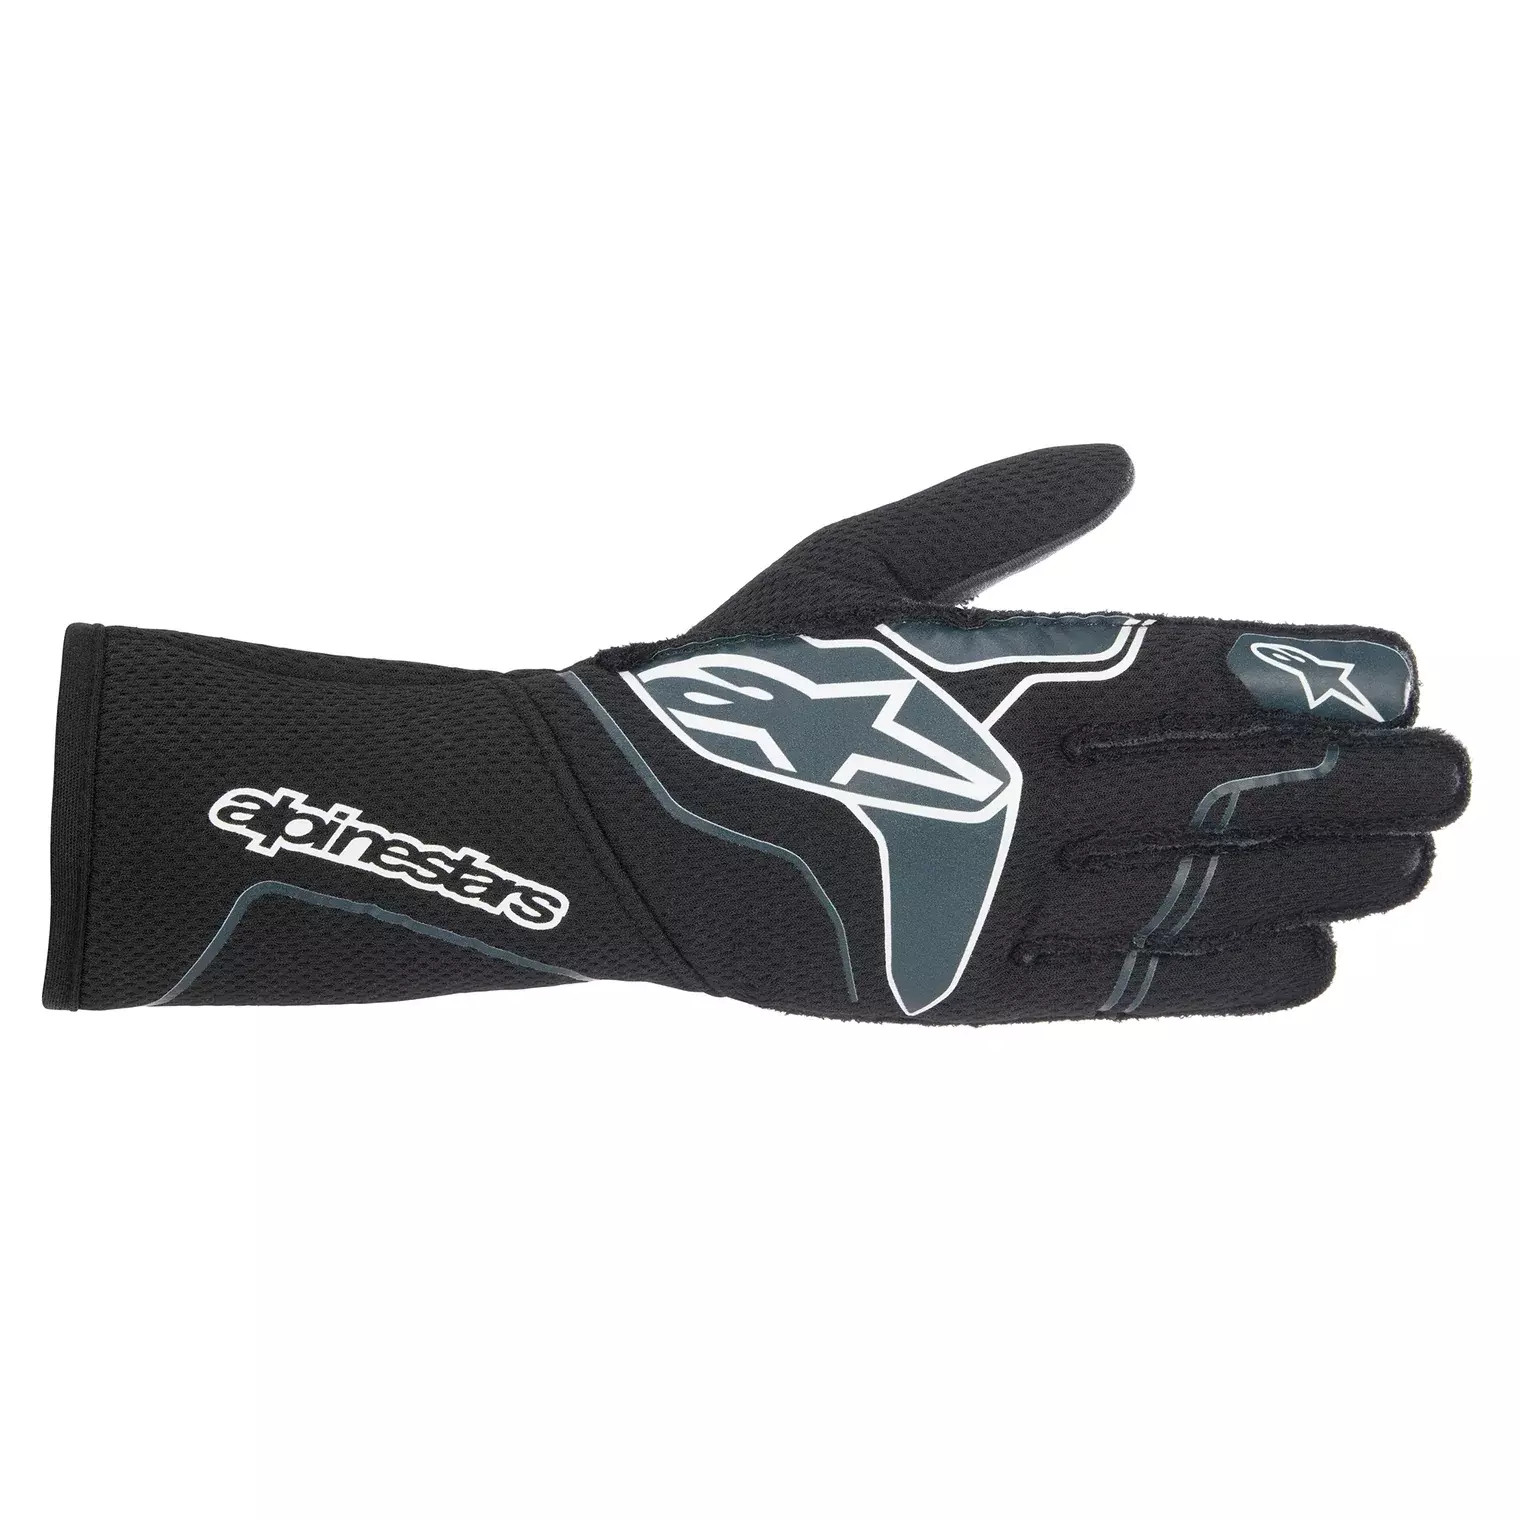 Gloves Tech 1-ZX Black / Grey Medium - 3550323-104-M